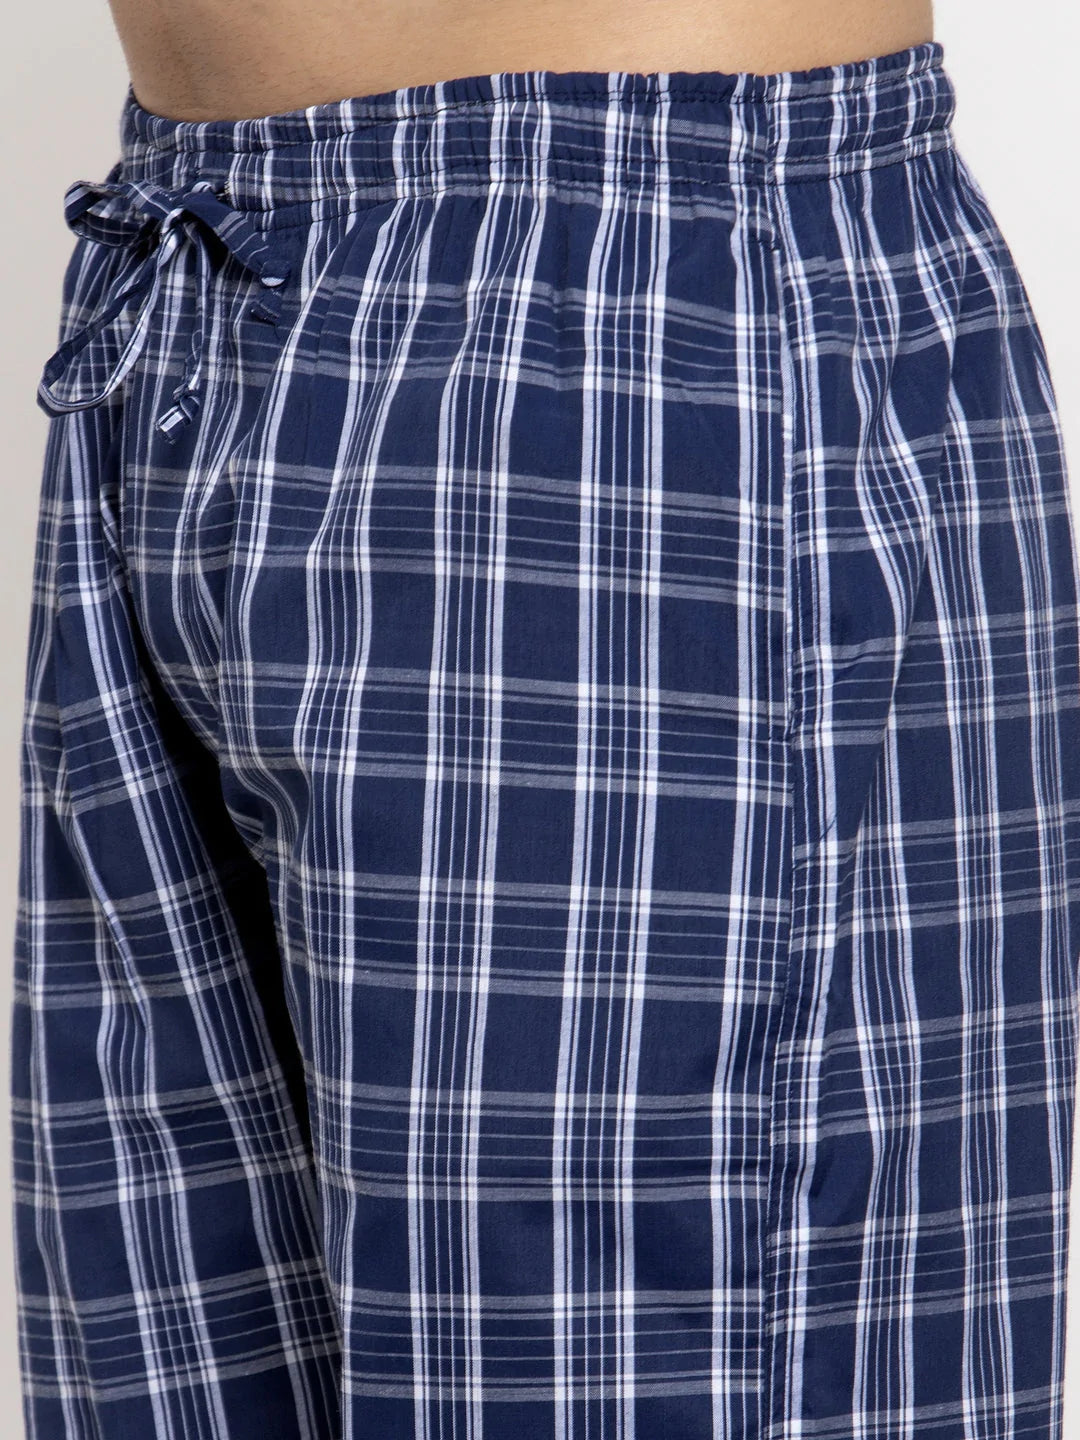 Jainish Men's Blue Checked Cotton Track Pants ( JOG 013Blue )